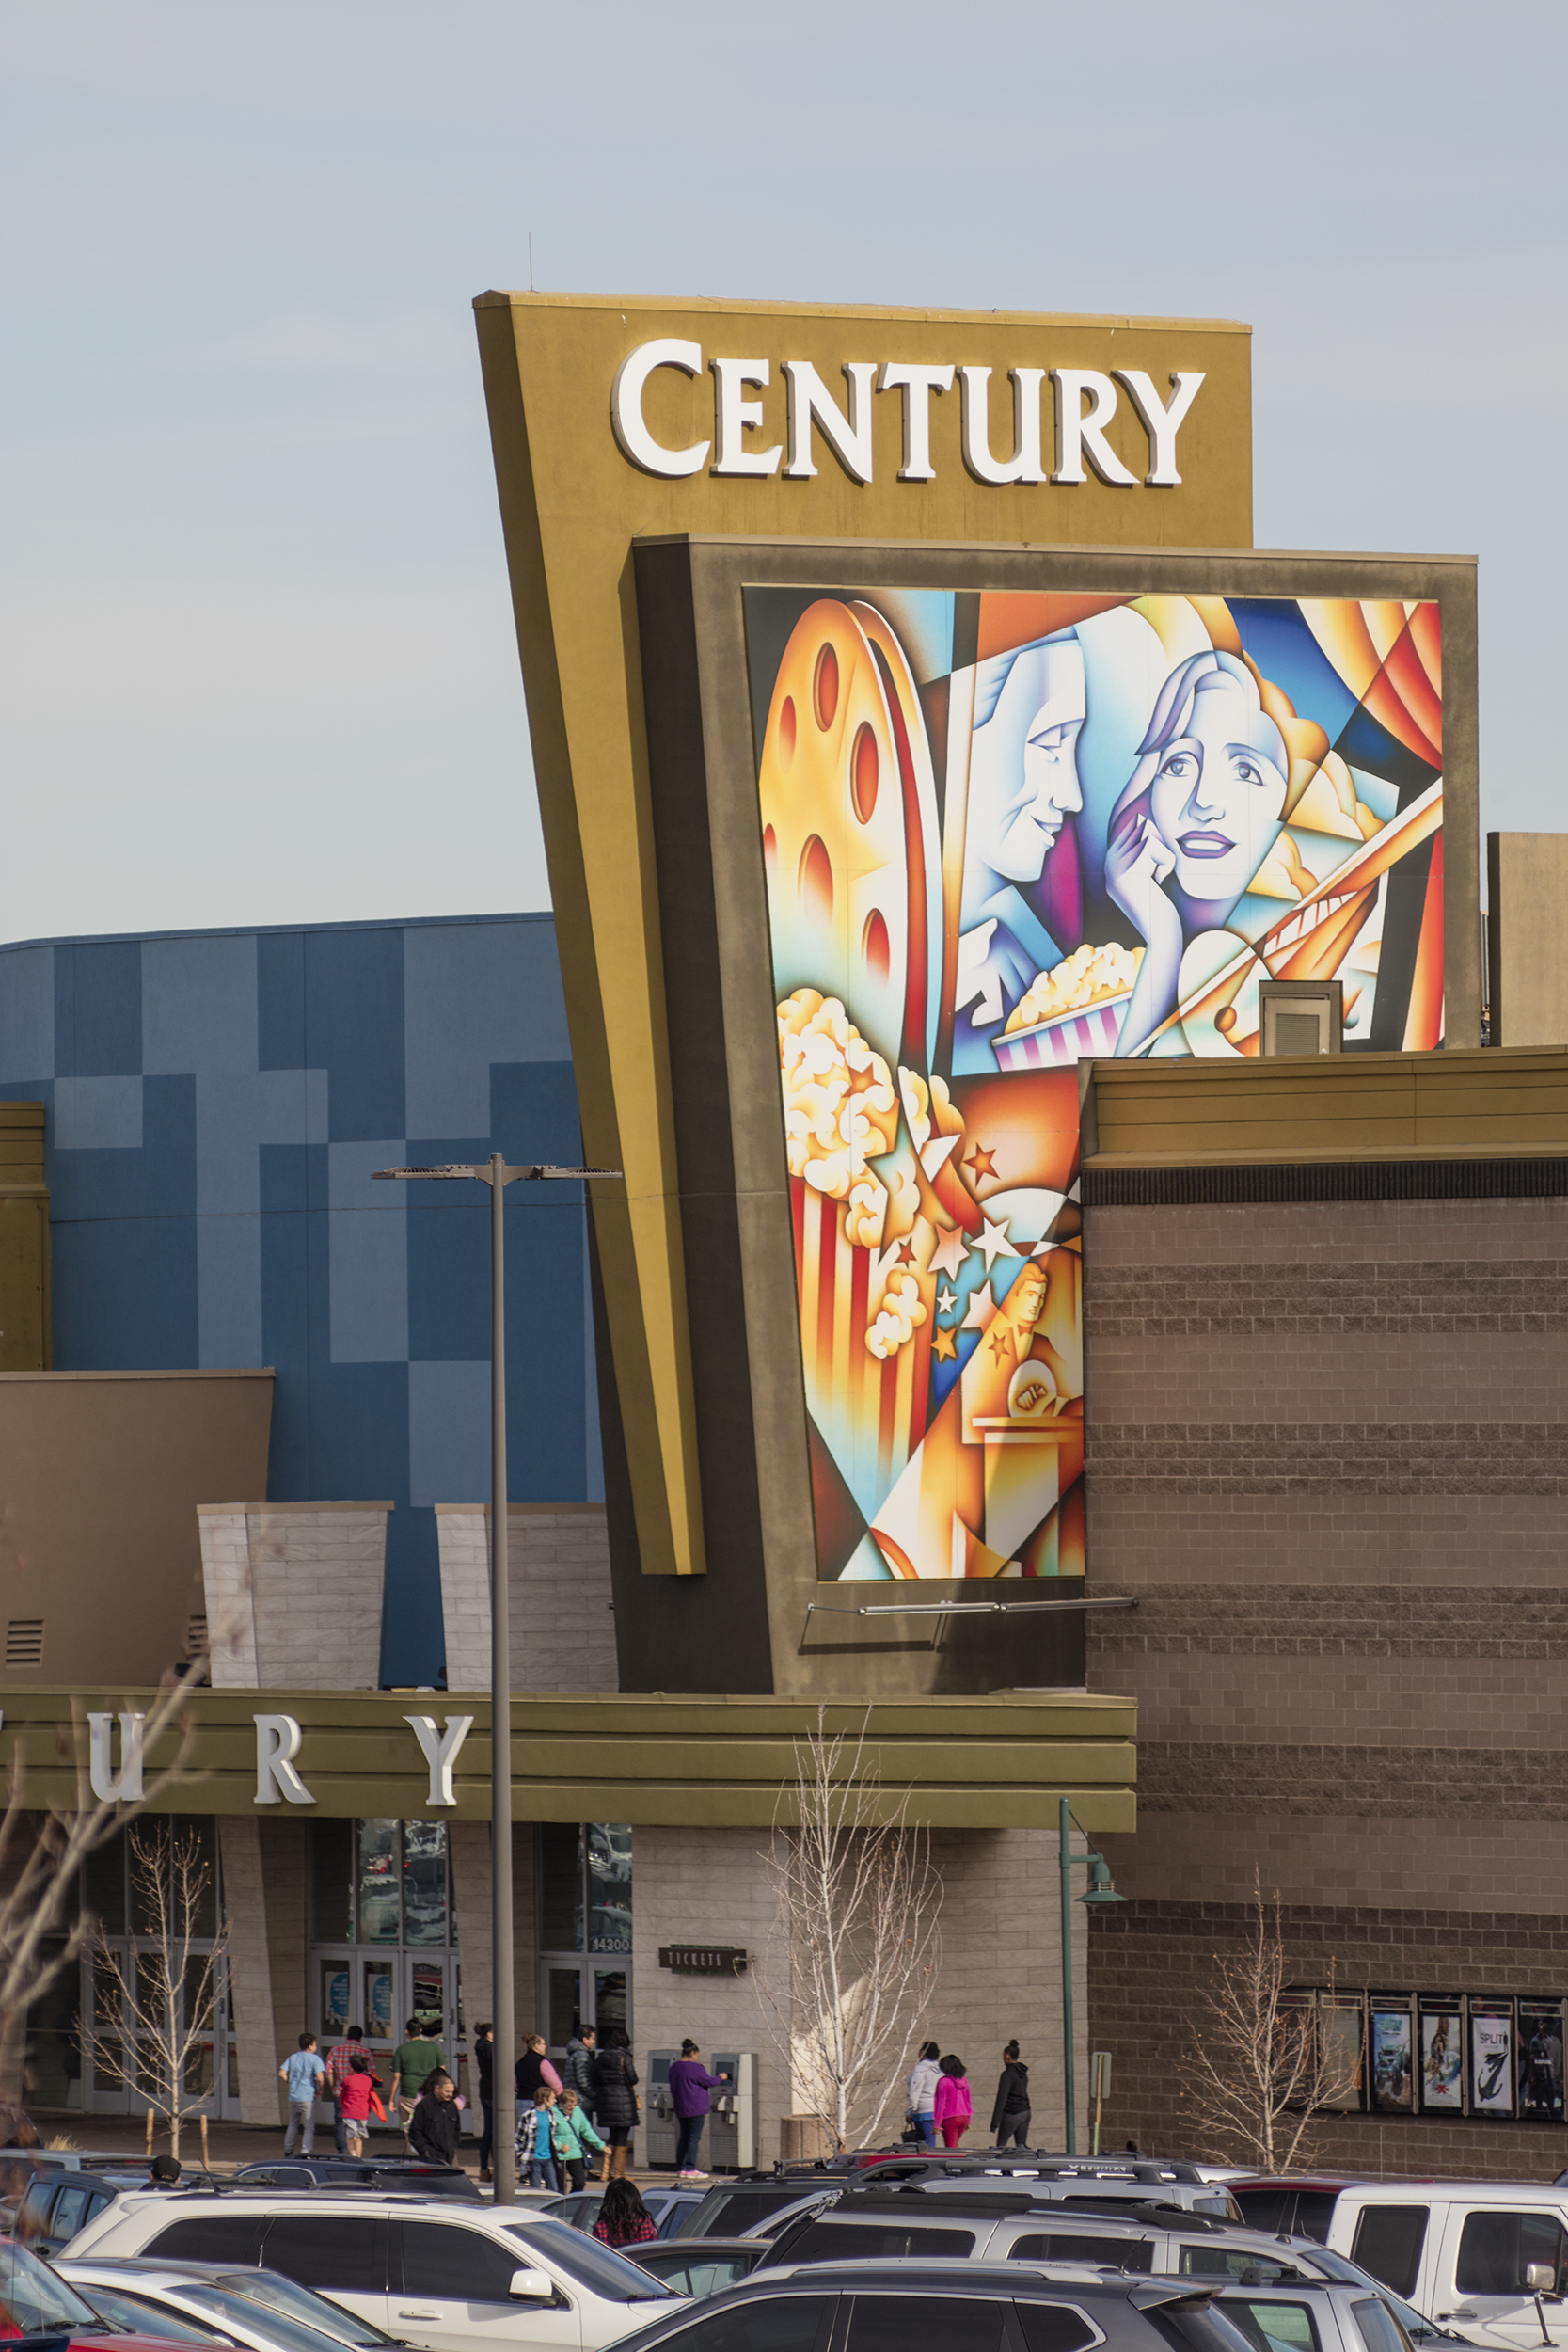  Century 16 Theater, Aurora, Colorado - Site of Mass-Shooting, July 16, 2015 - 12 Dead. 